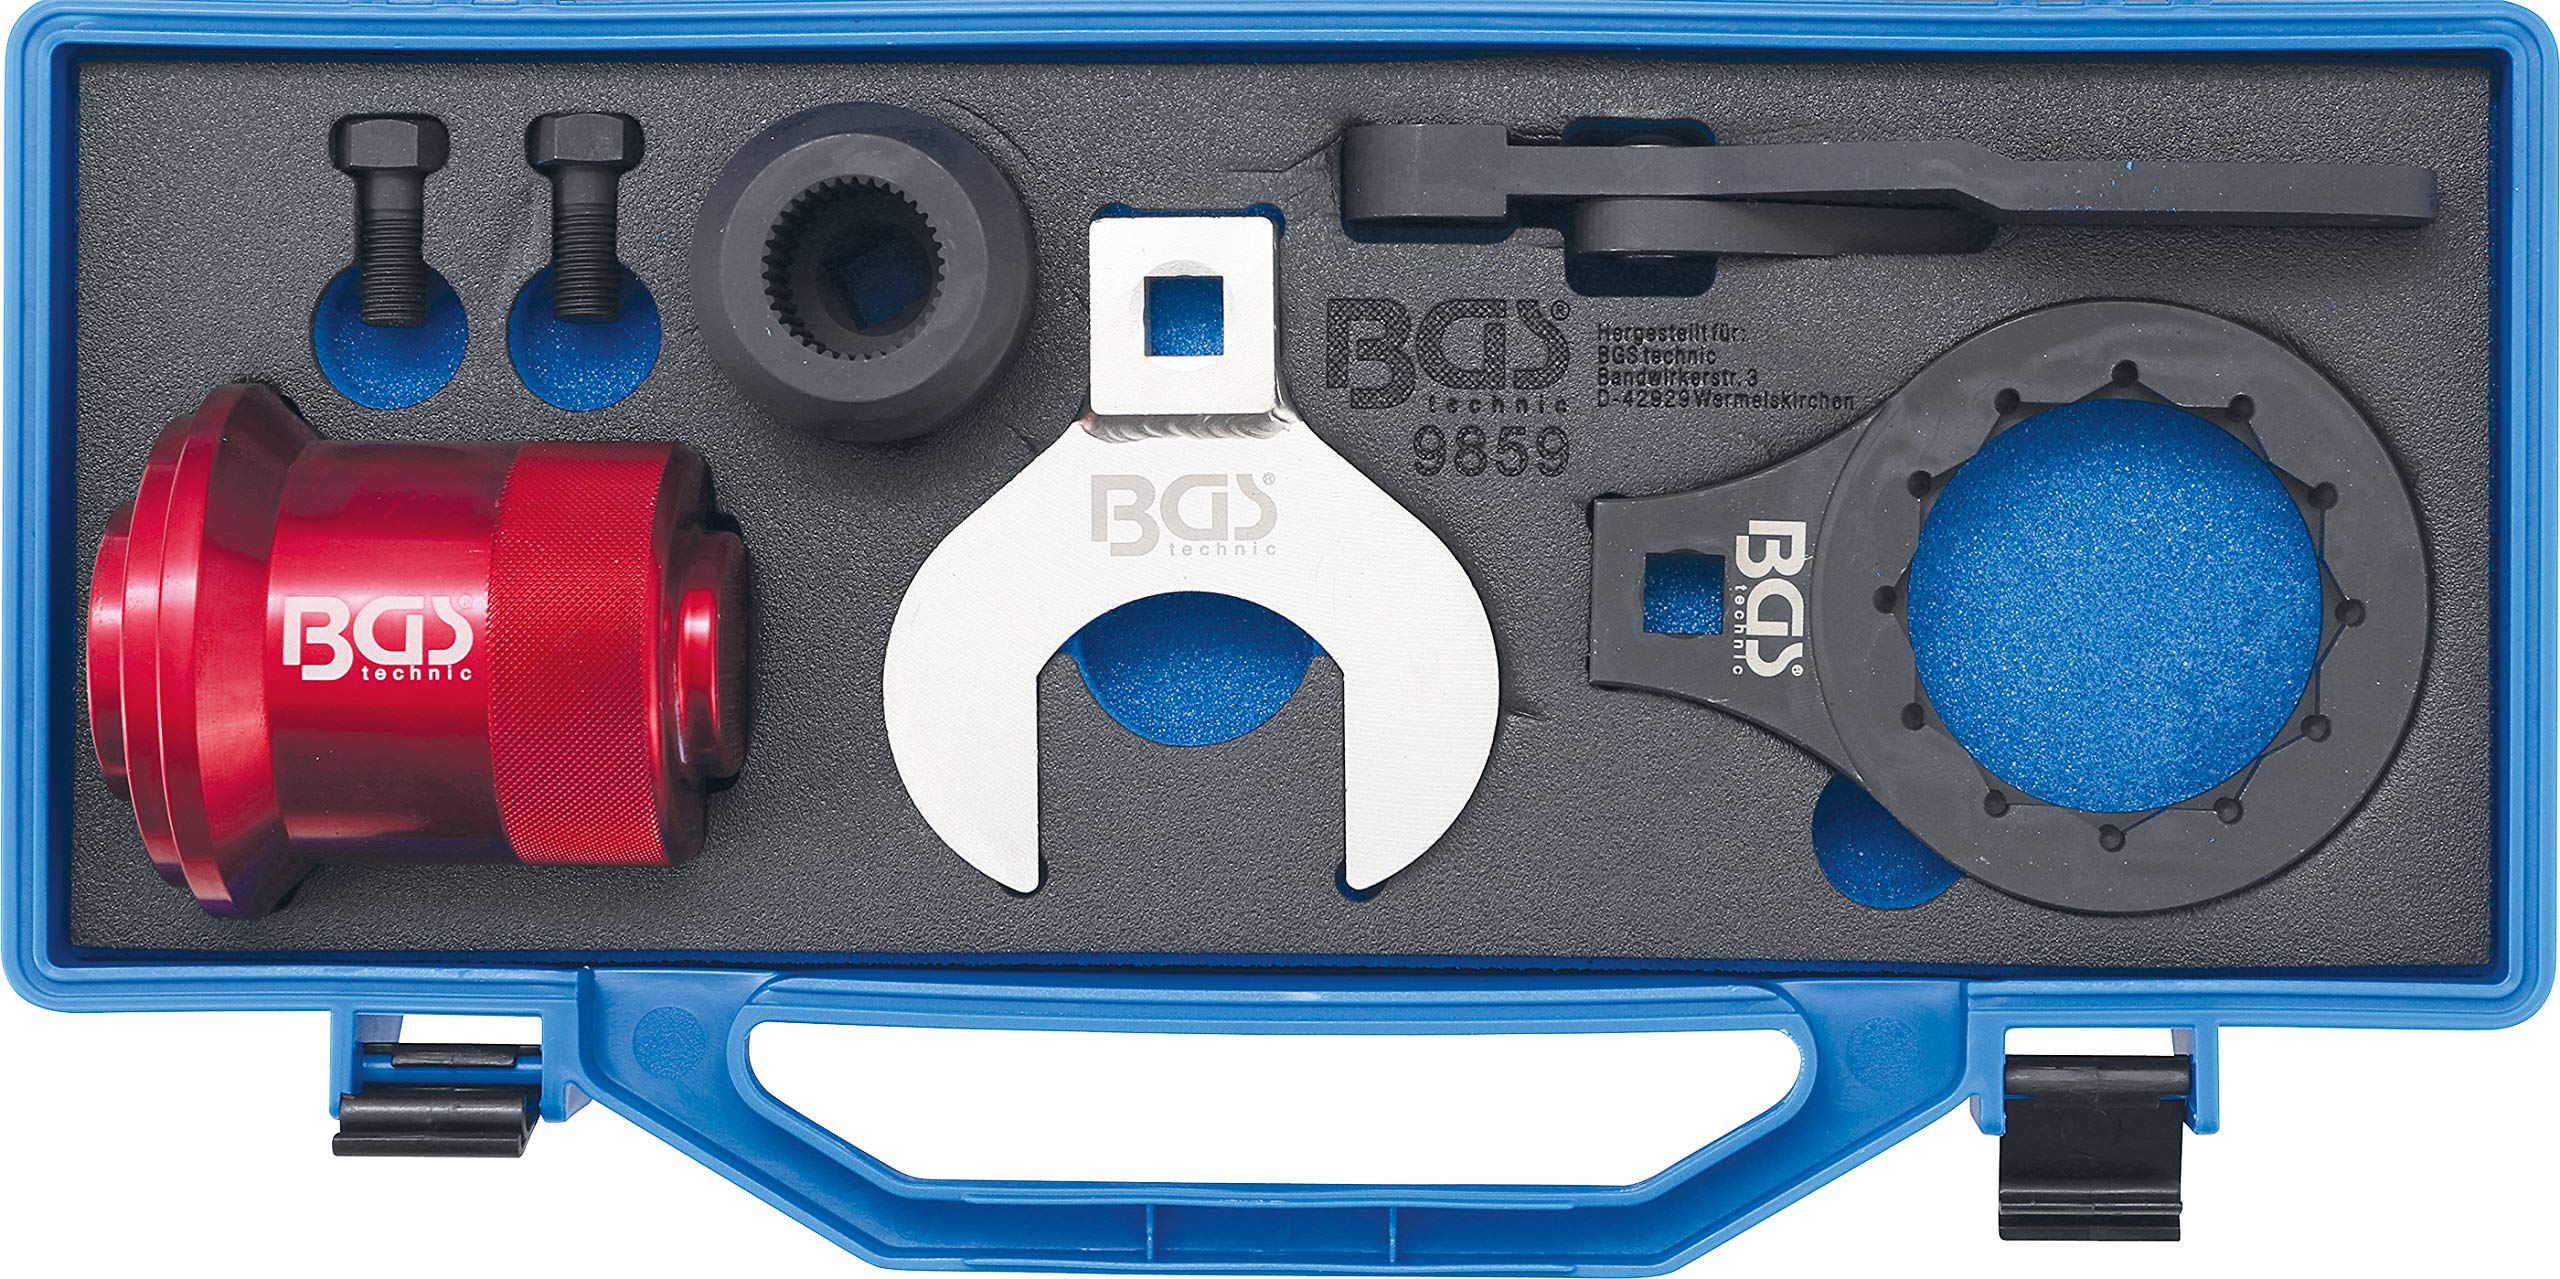 BGS 9859 | Differentialflansch- & Einlegemutter-Werkzeug-Satz | für BMW E70, E82, E90, E91, E92, E93